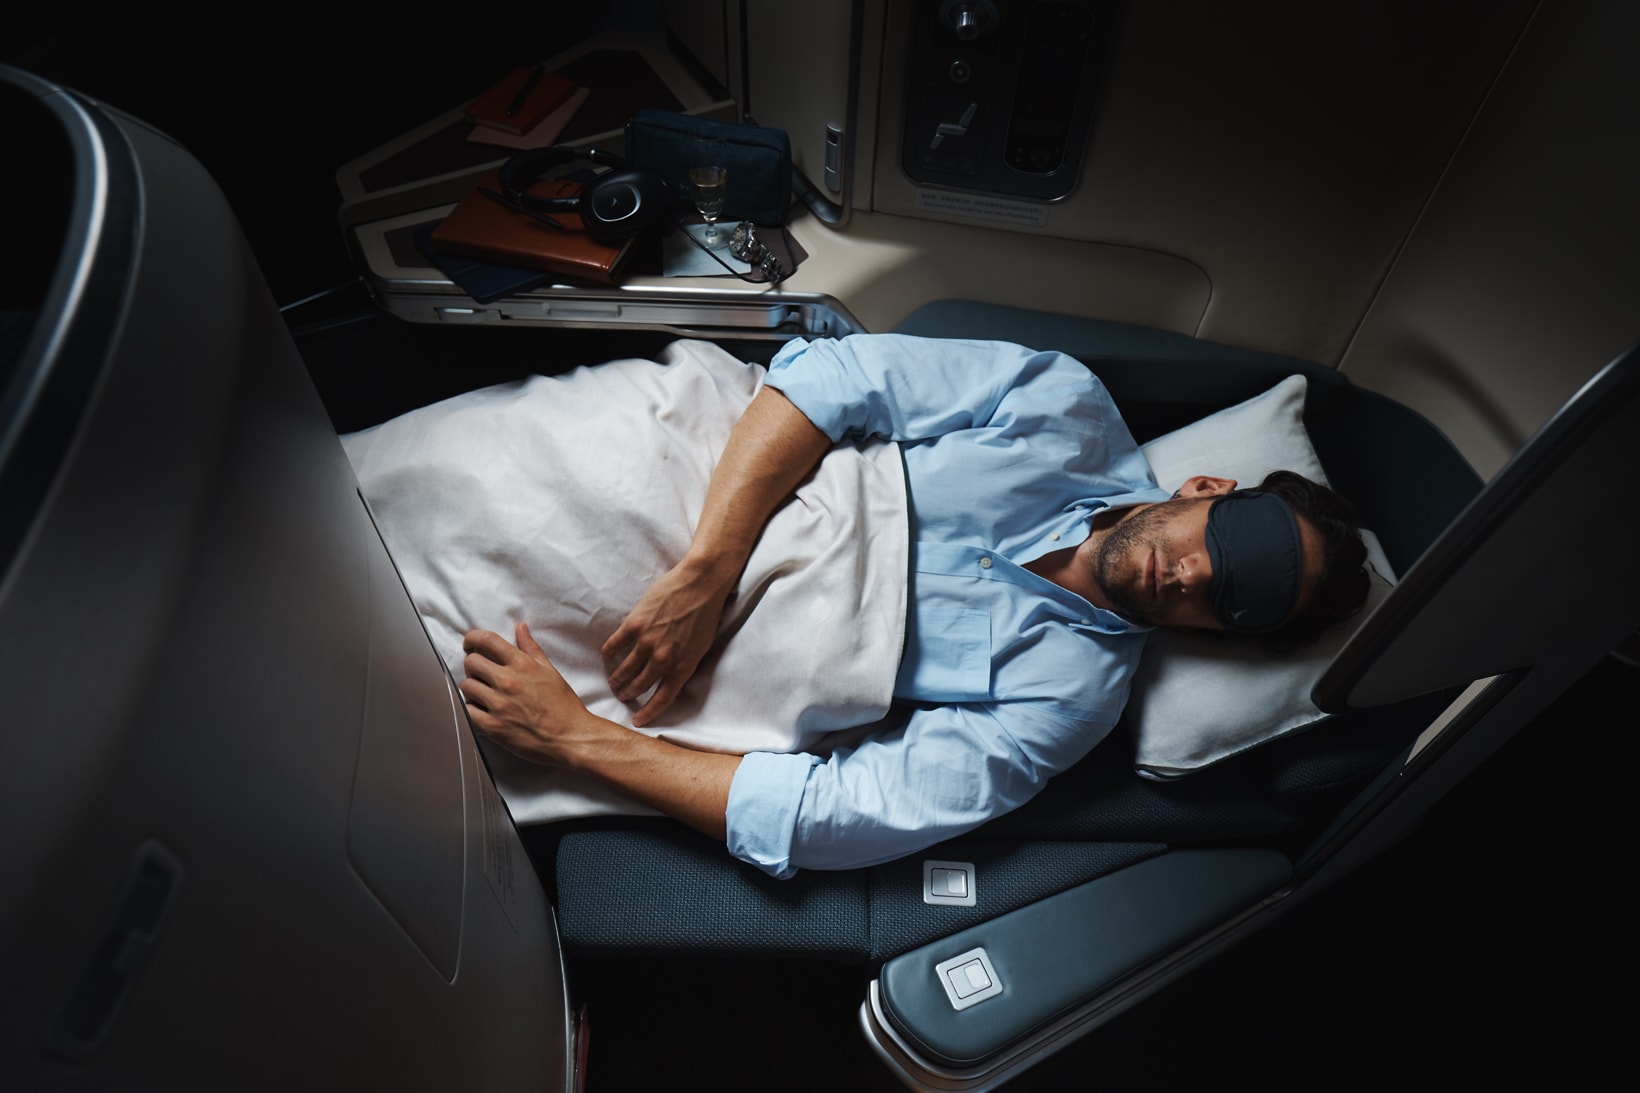 Cathay Pacific Giveaway aircraft interior sleep mode